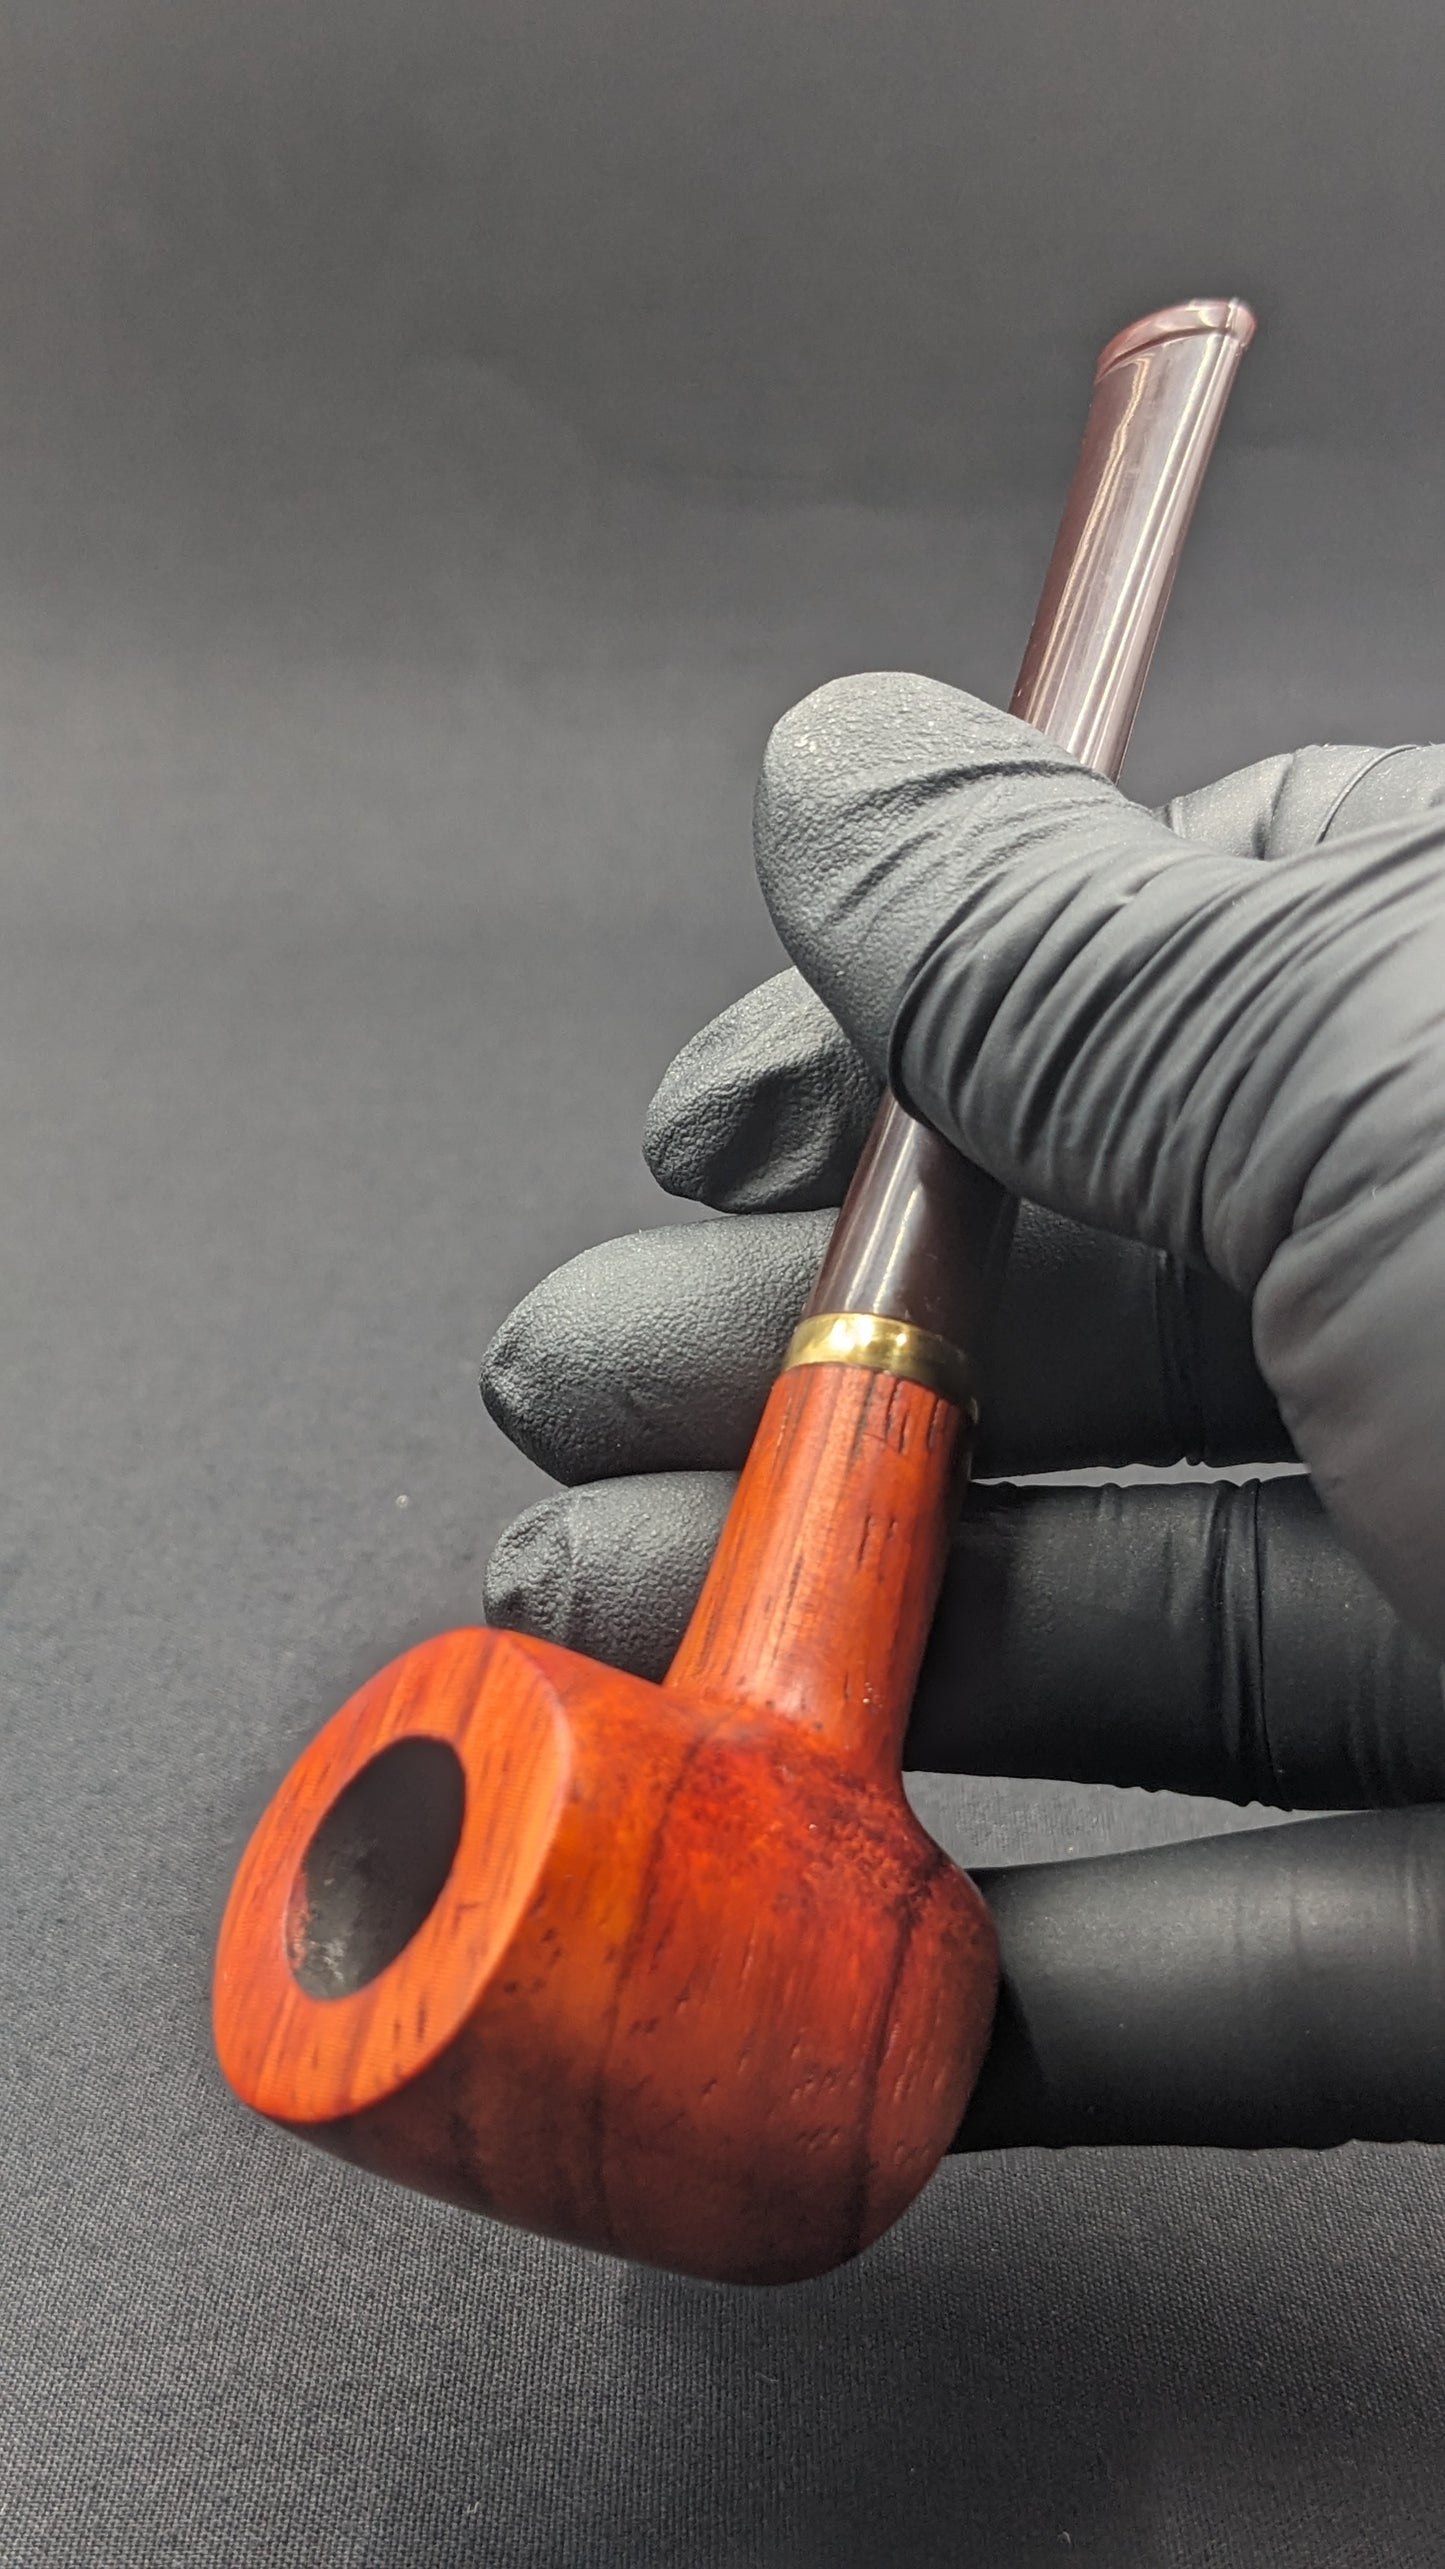 5.5" Wood Sherlock Pipe WD10